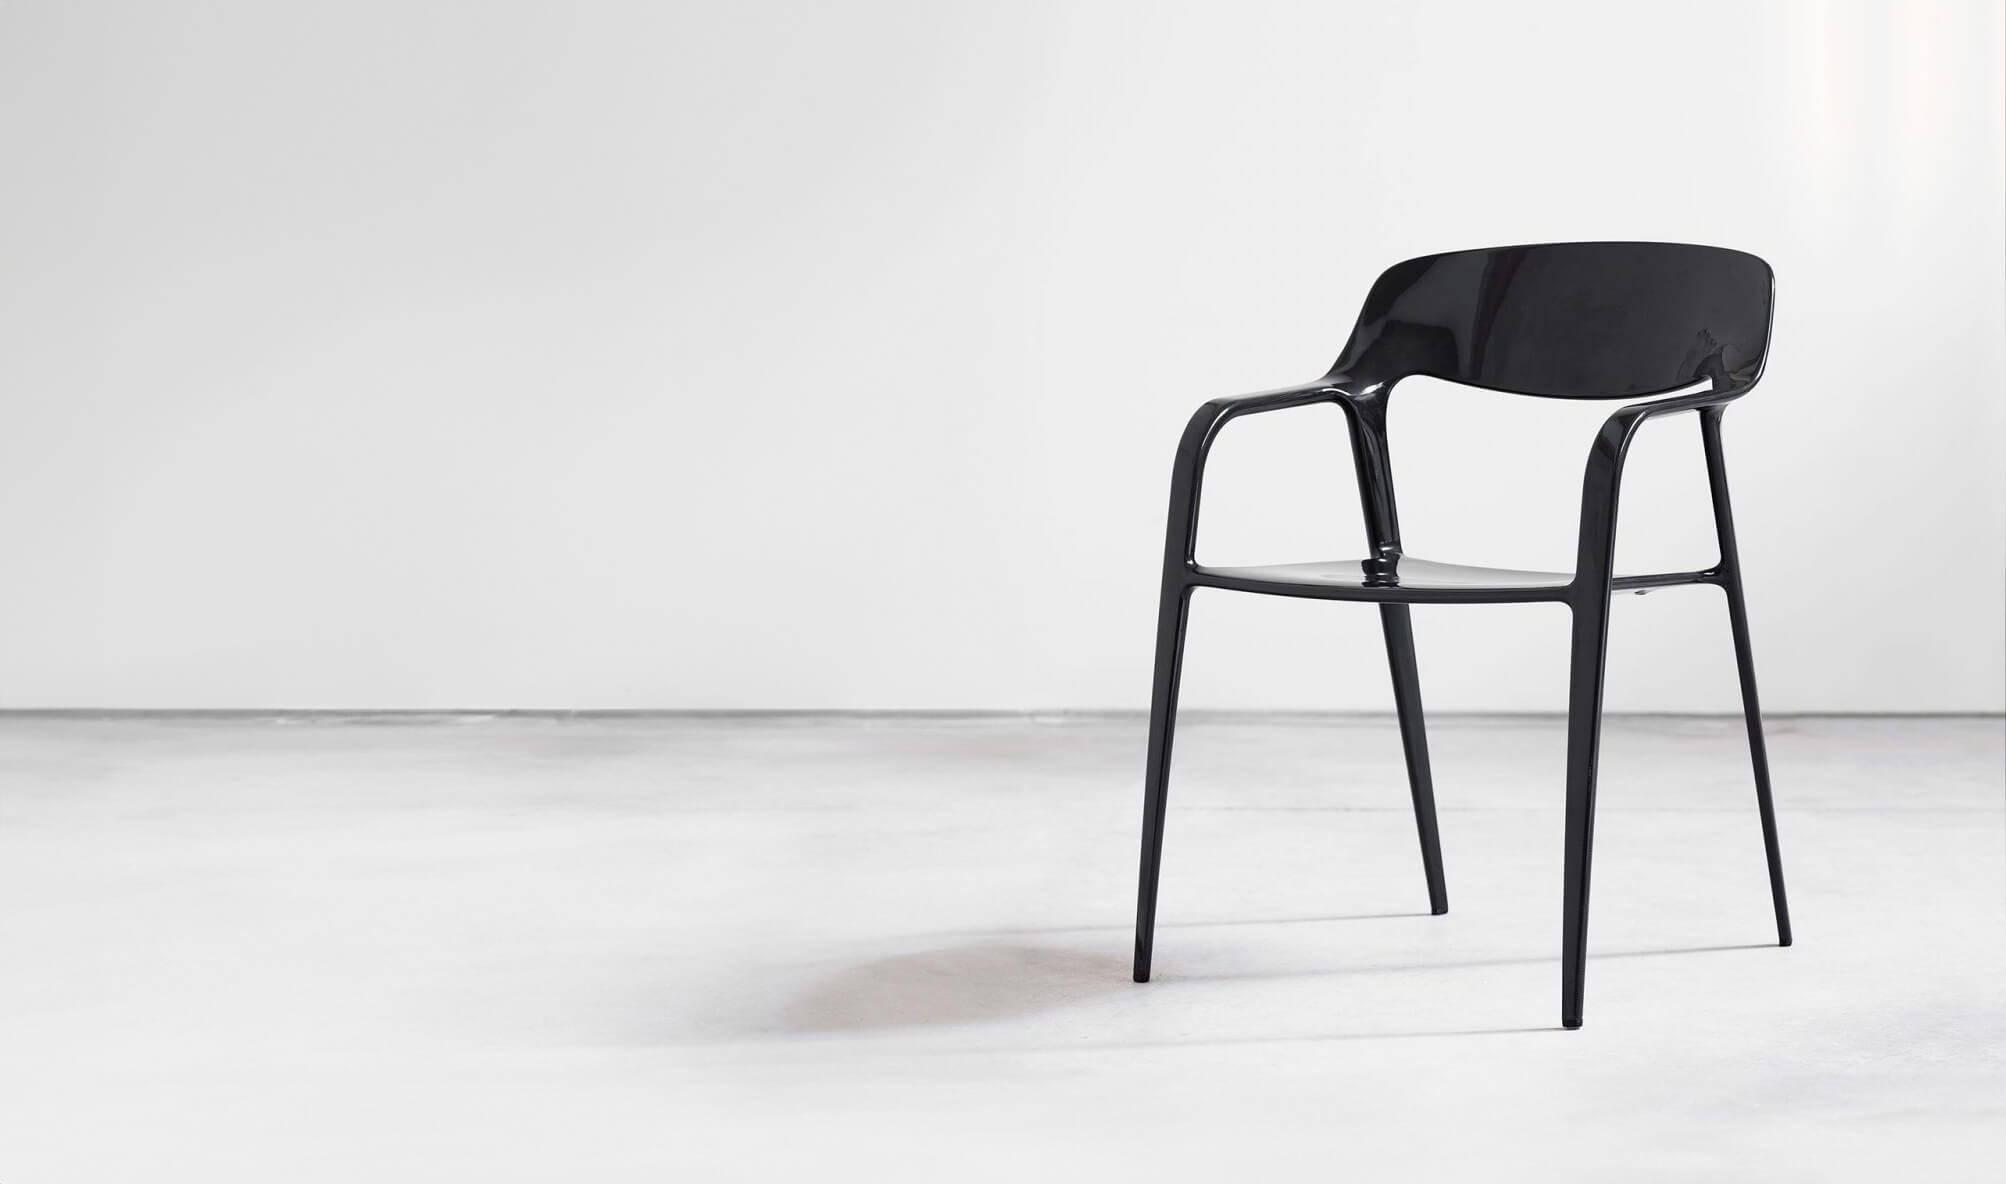 Chair design by Nacar Design in Barcelona